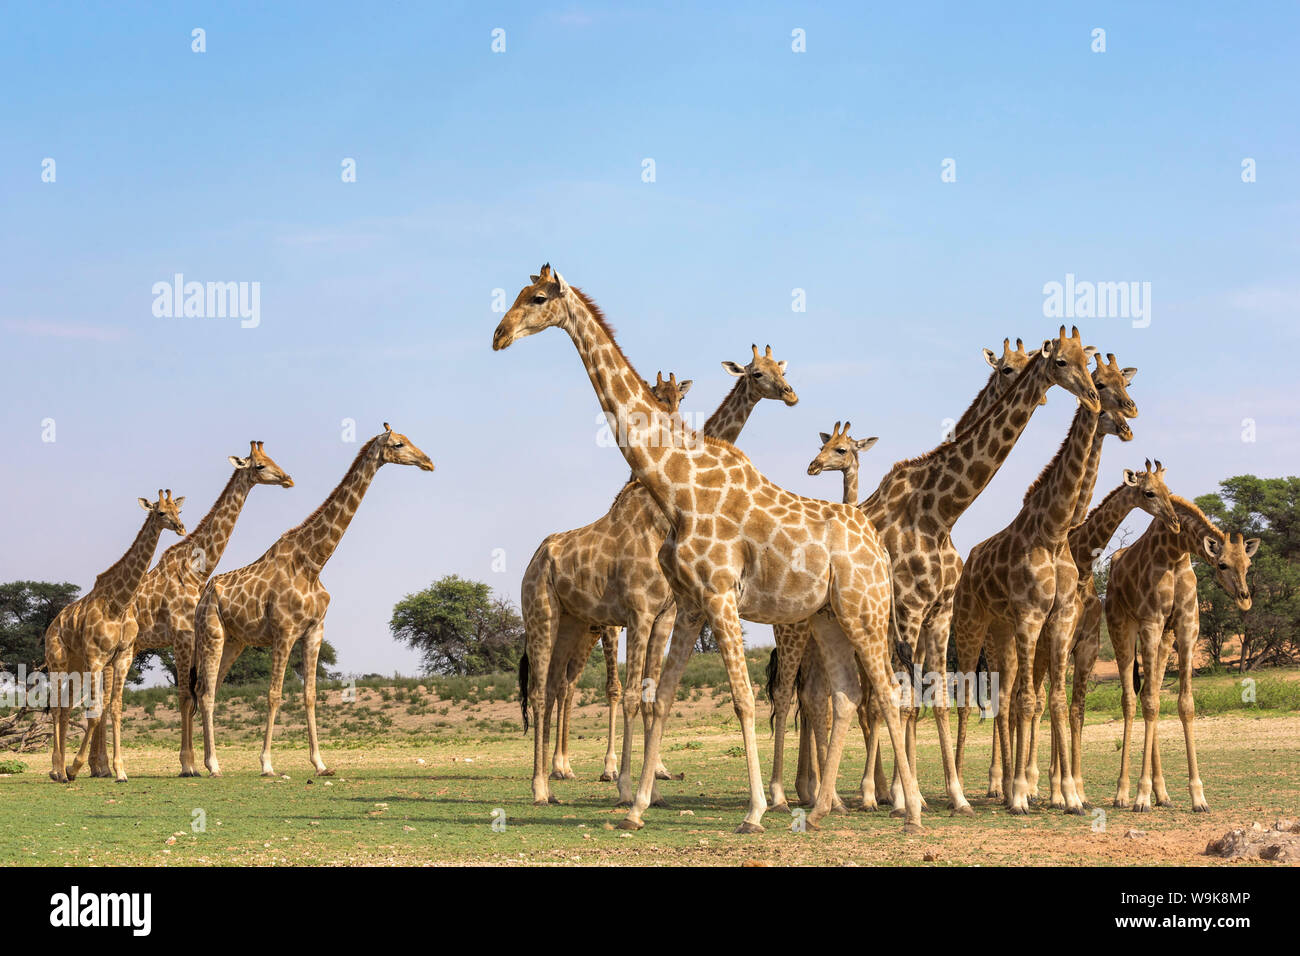 Giraffes (Giraffa camelopardalis) in a group, Kgalagadi Transfrontier Park, Northern Cape, South Africa, Africa Stock Photo